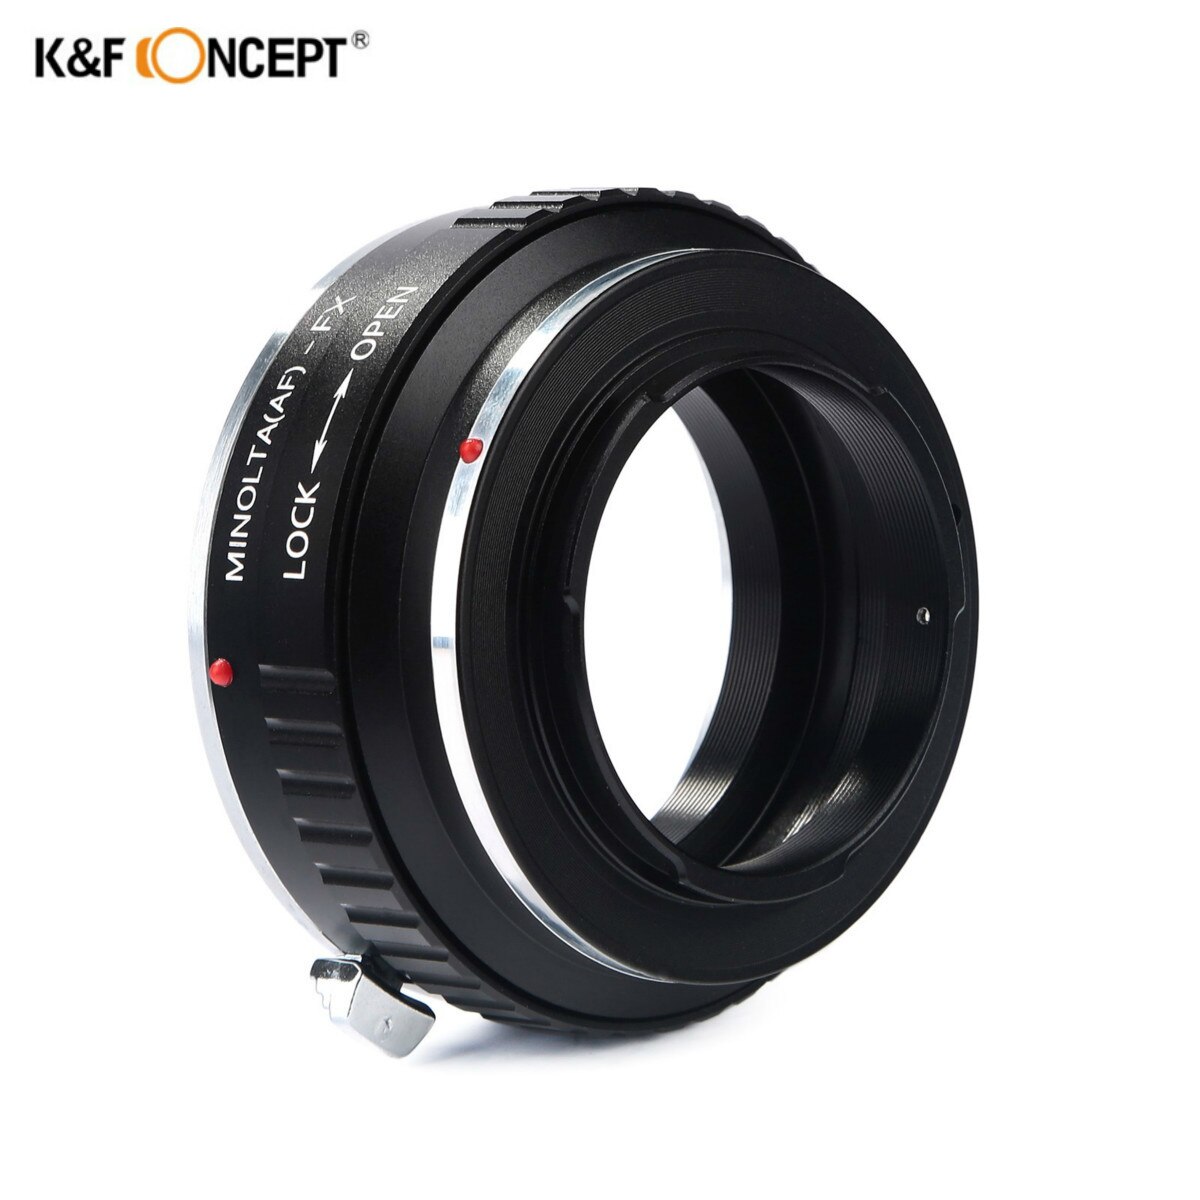 K & F Concept Lens Mount Adapter Voor Sony Alpha (Minolta Af A-Type) lens Fujifilm X-Pro1 Mirrorless Camera